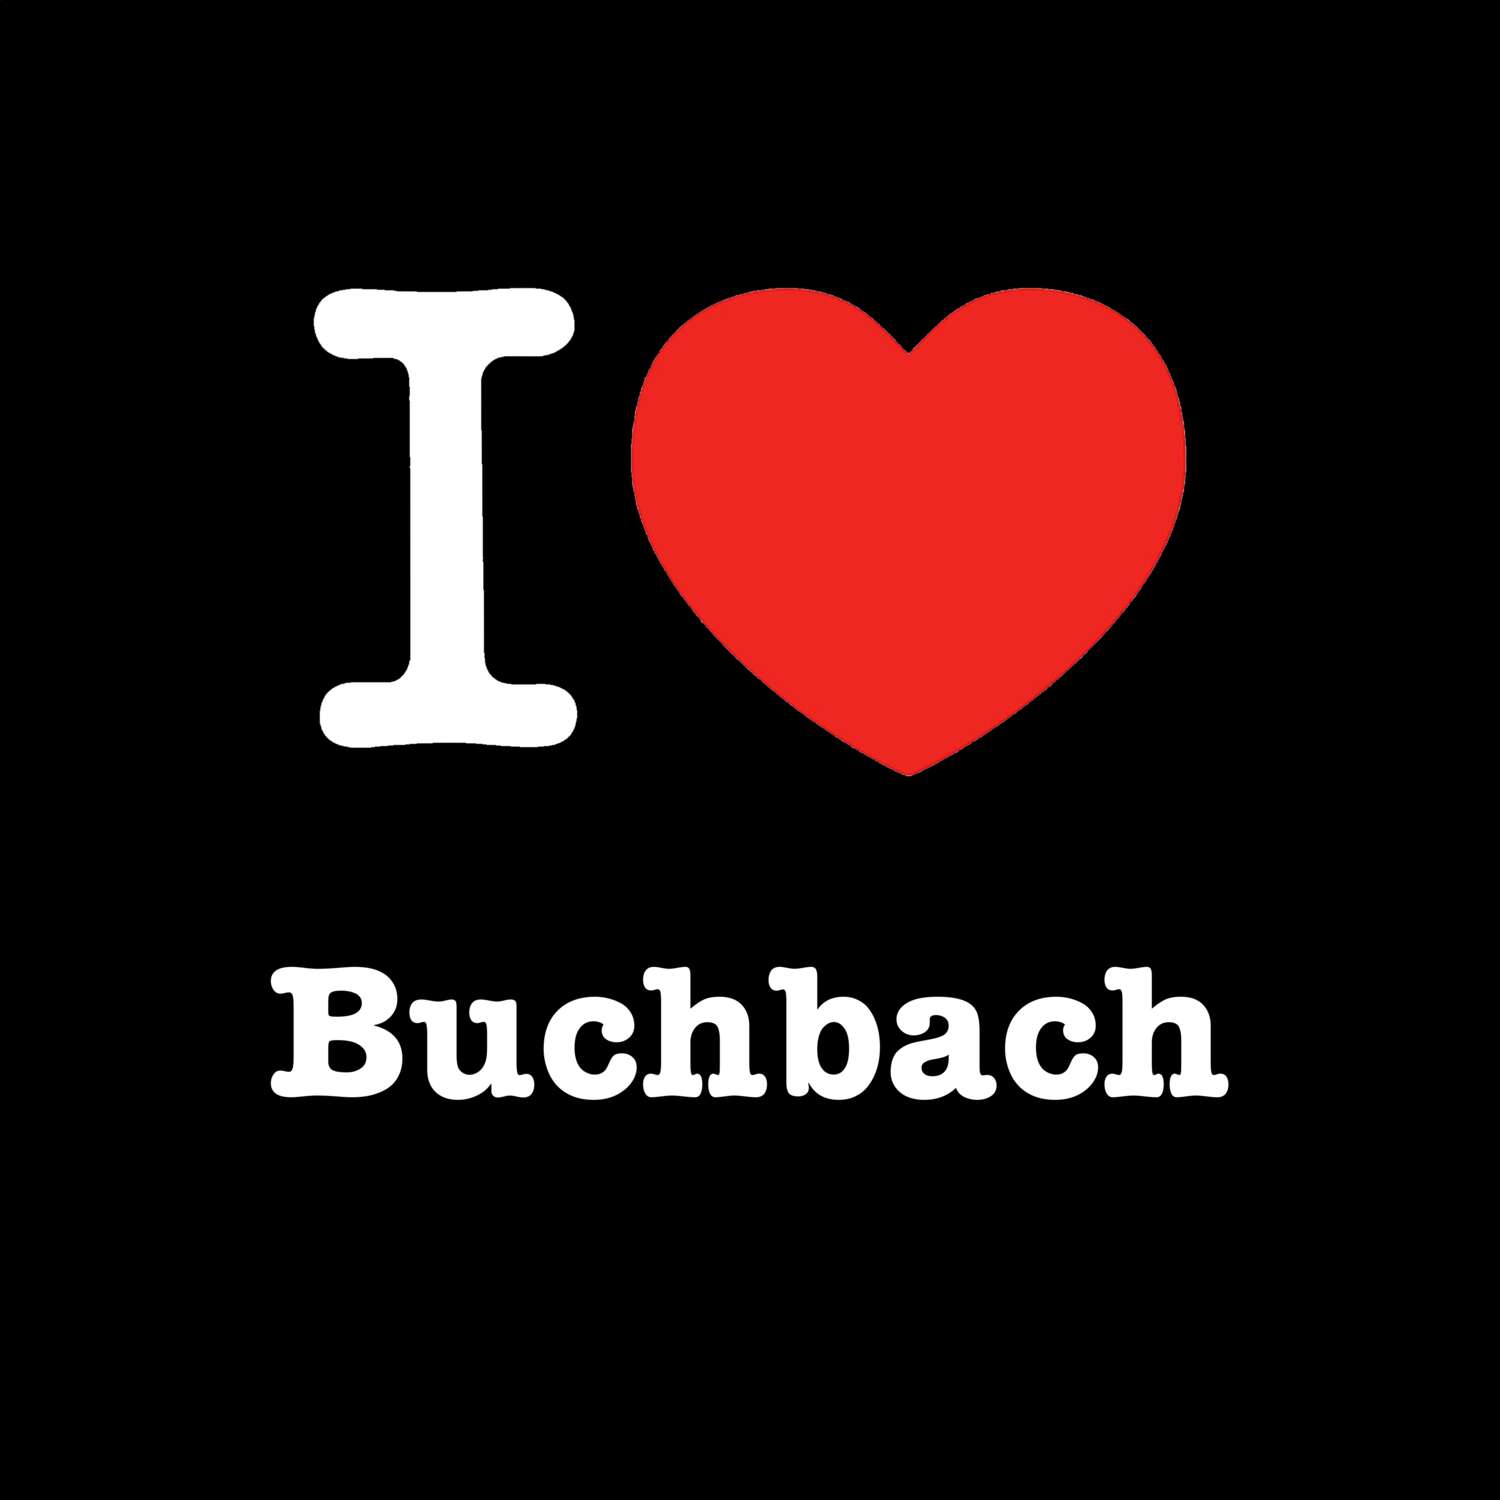 Buchbach T-Shirt »I love«